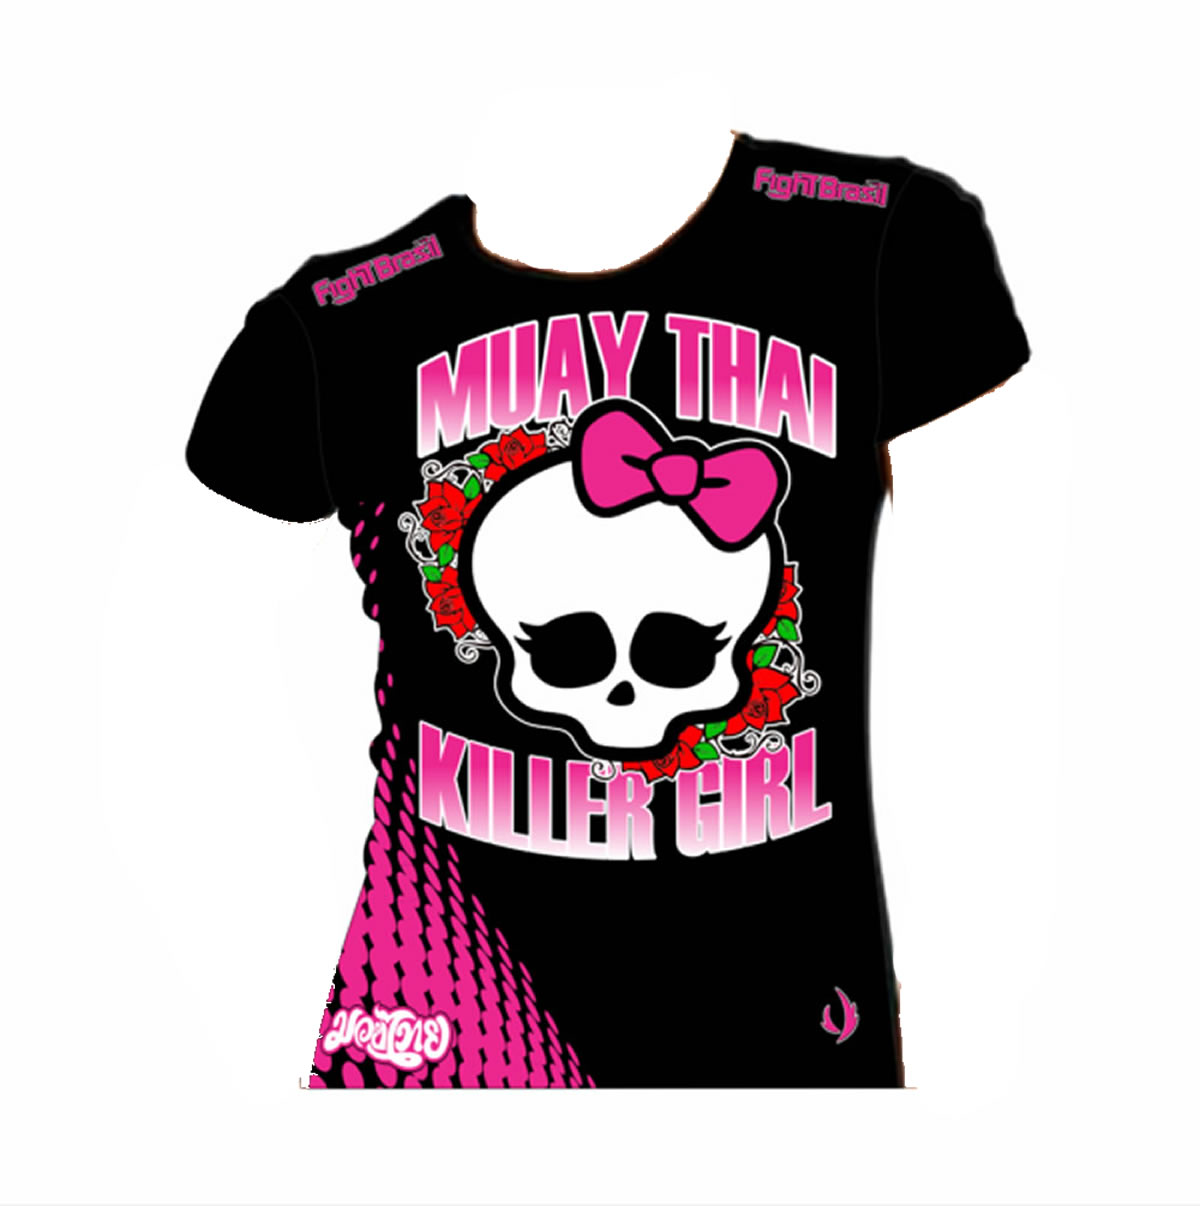 Camiseta Muay Thai Killer Girl - Baby Look Feminina - Fb-2045  - Loja do Competidor